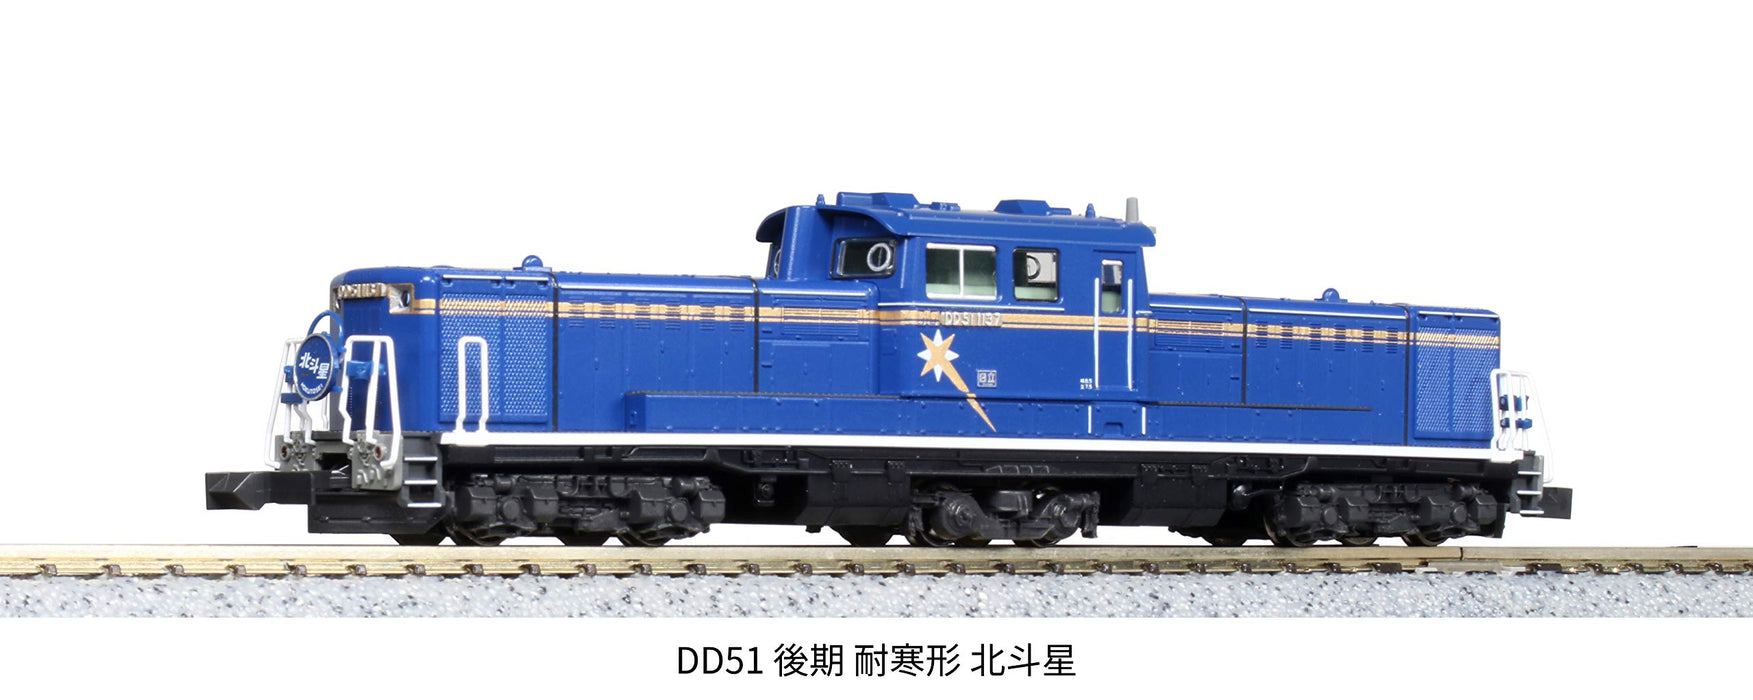 Kato N Gauge Dd51 7008-F Electric Locomotive